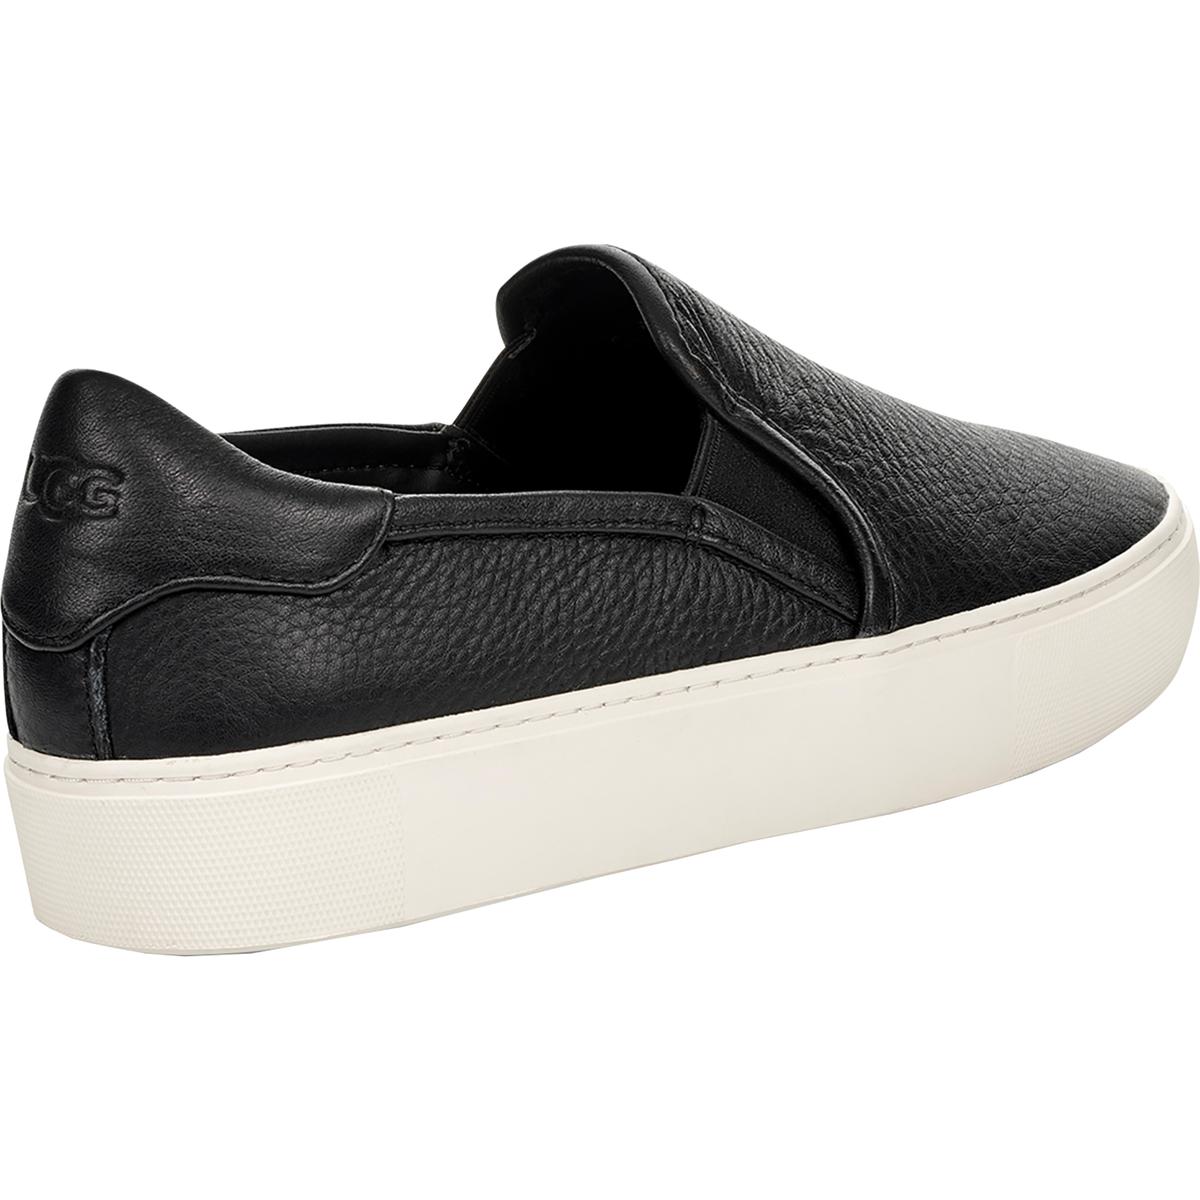 Ugg Womens Jass Black Leather Slip On Sneakers Shoes 6 Medium (B,M ...